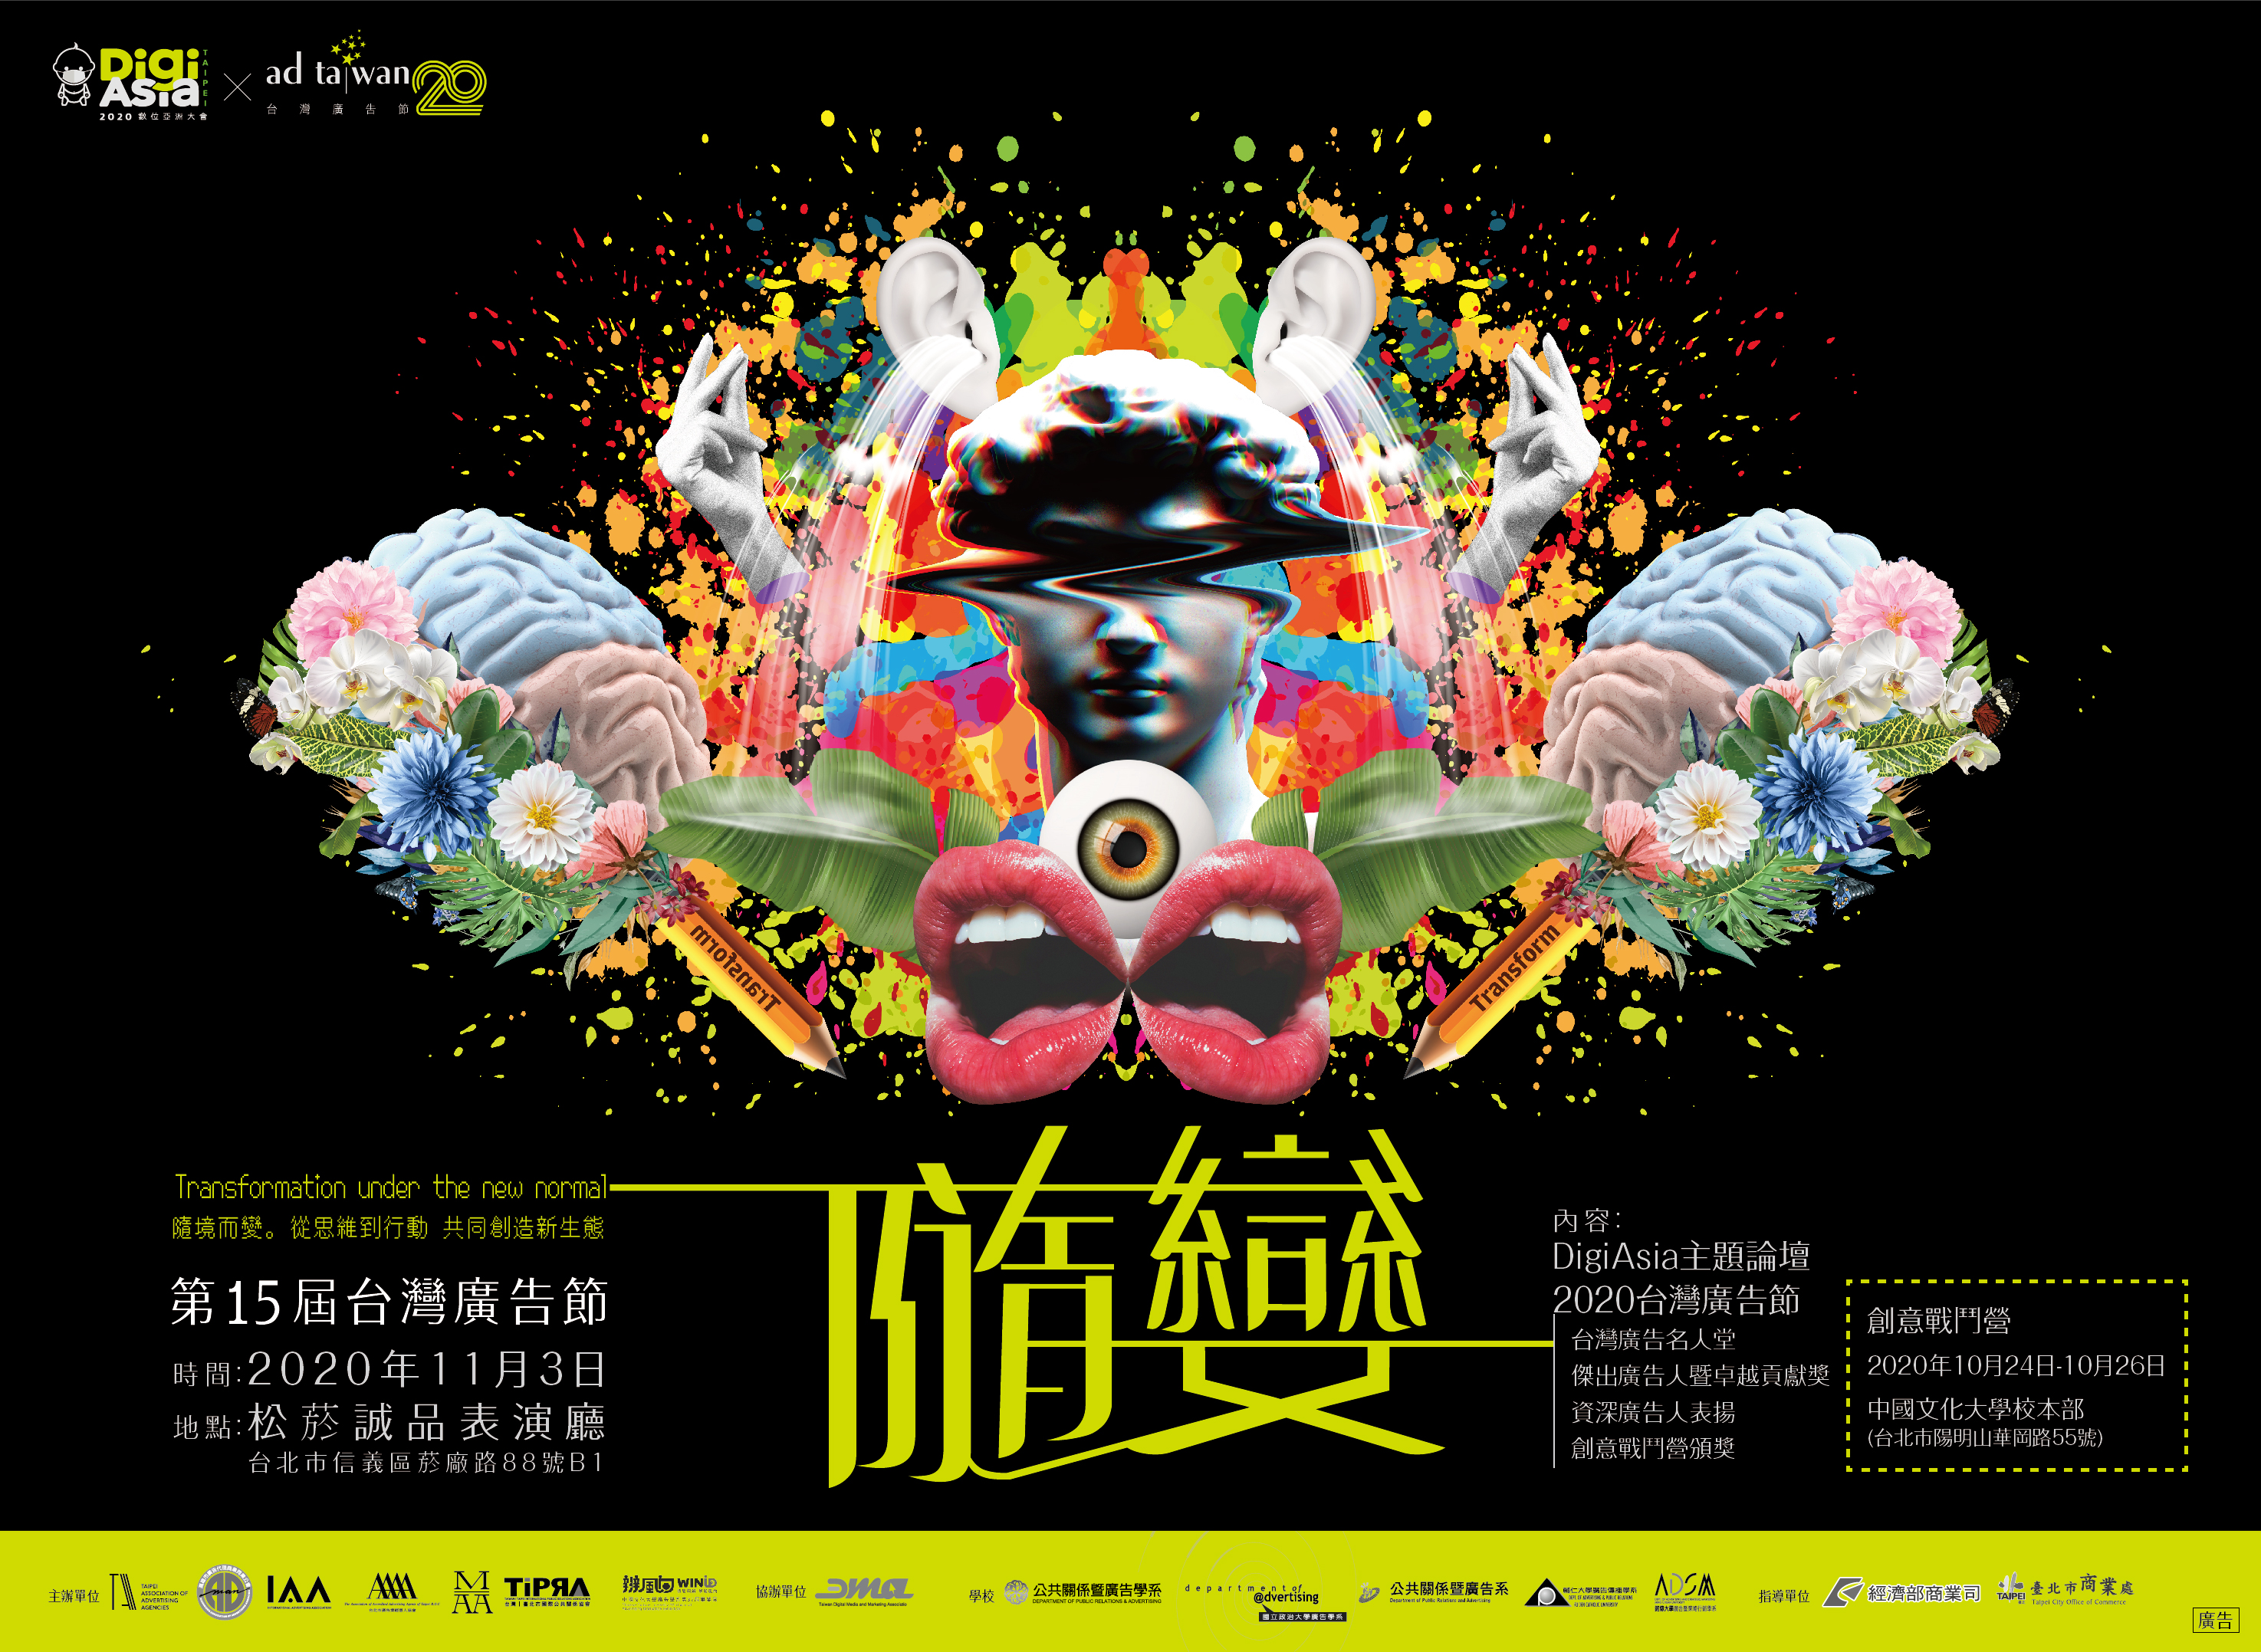 DigiAsia 2020 x 第十五屆台灣廣告節 快來跟我們一起「隨變」!